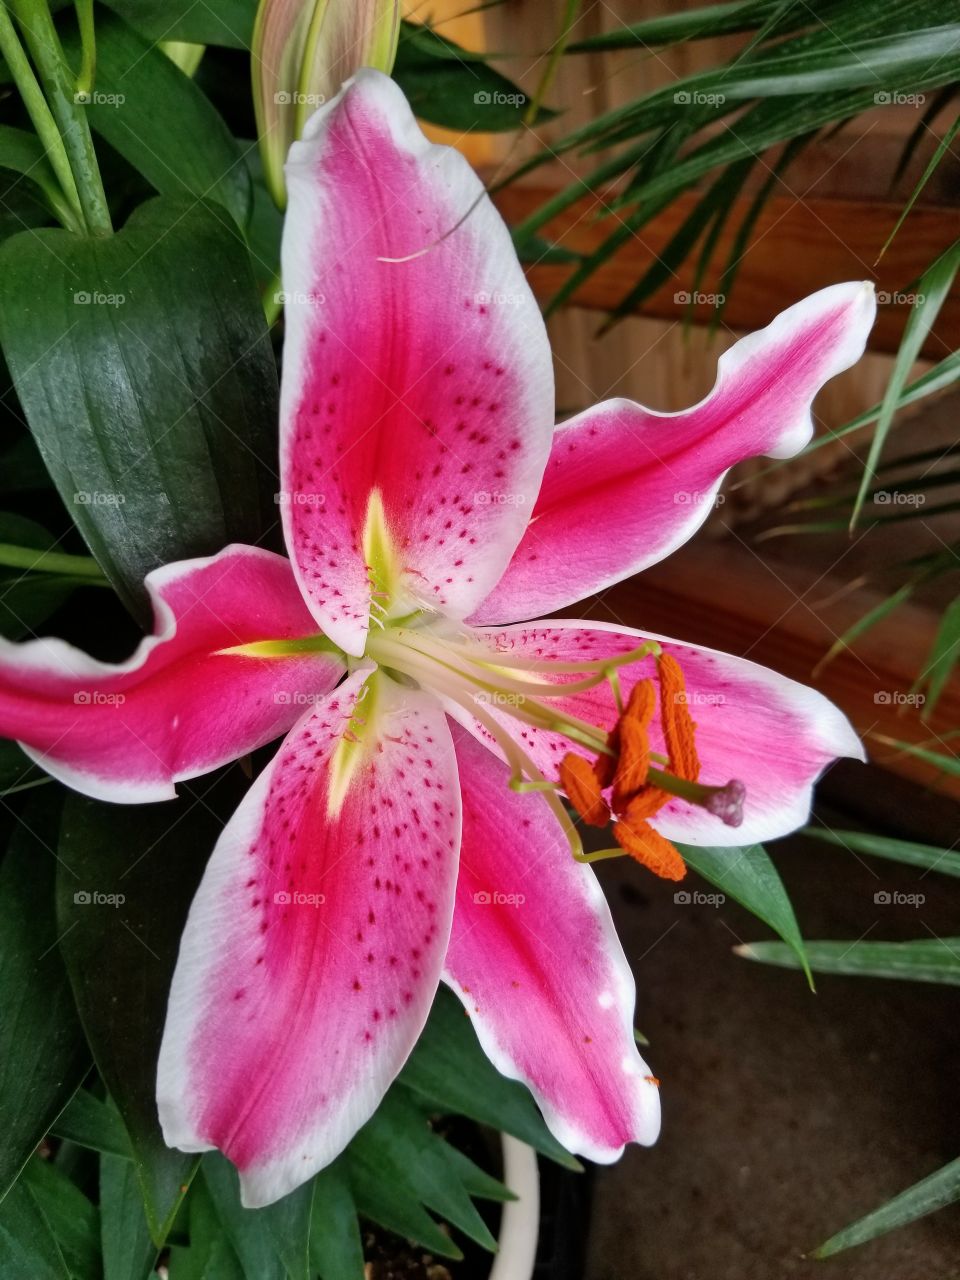 Tropical flower in full bloom